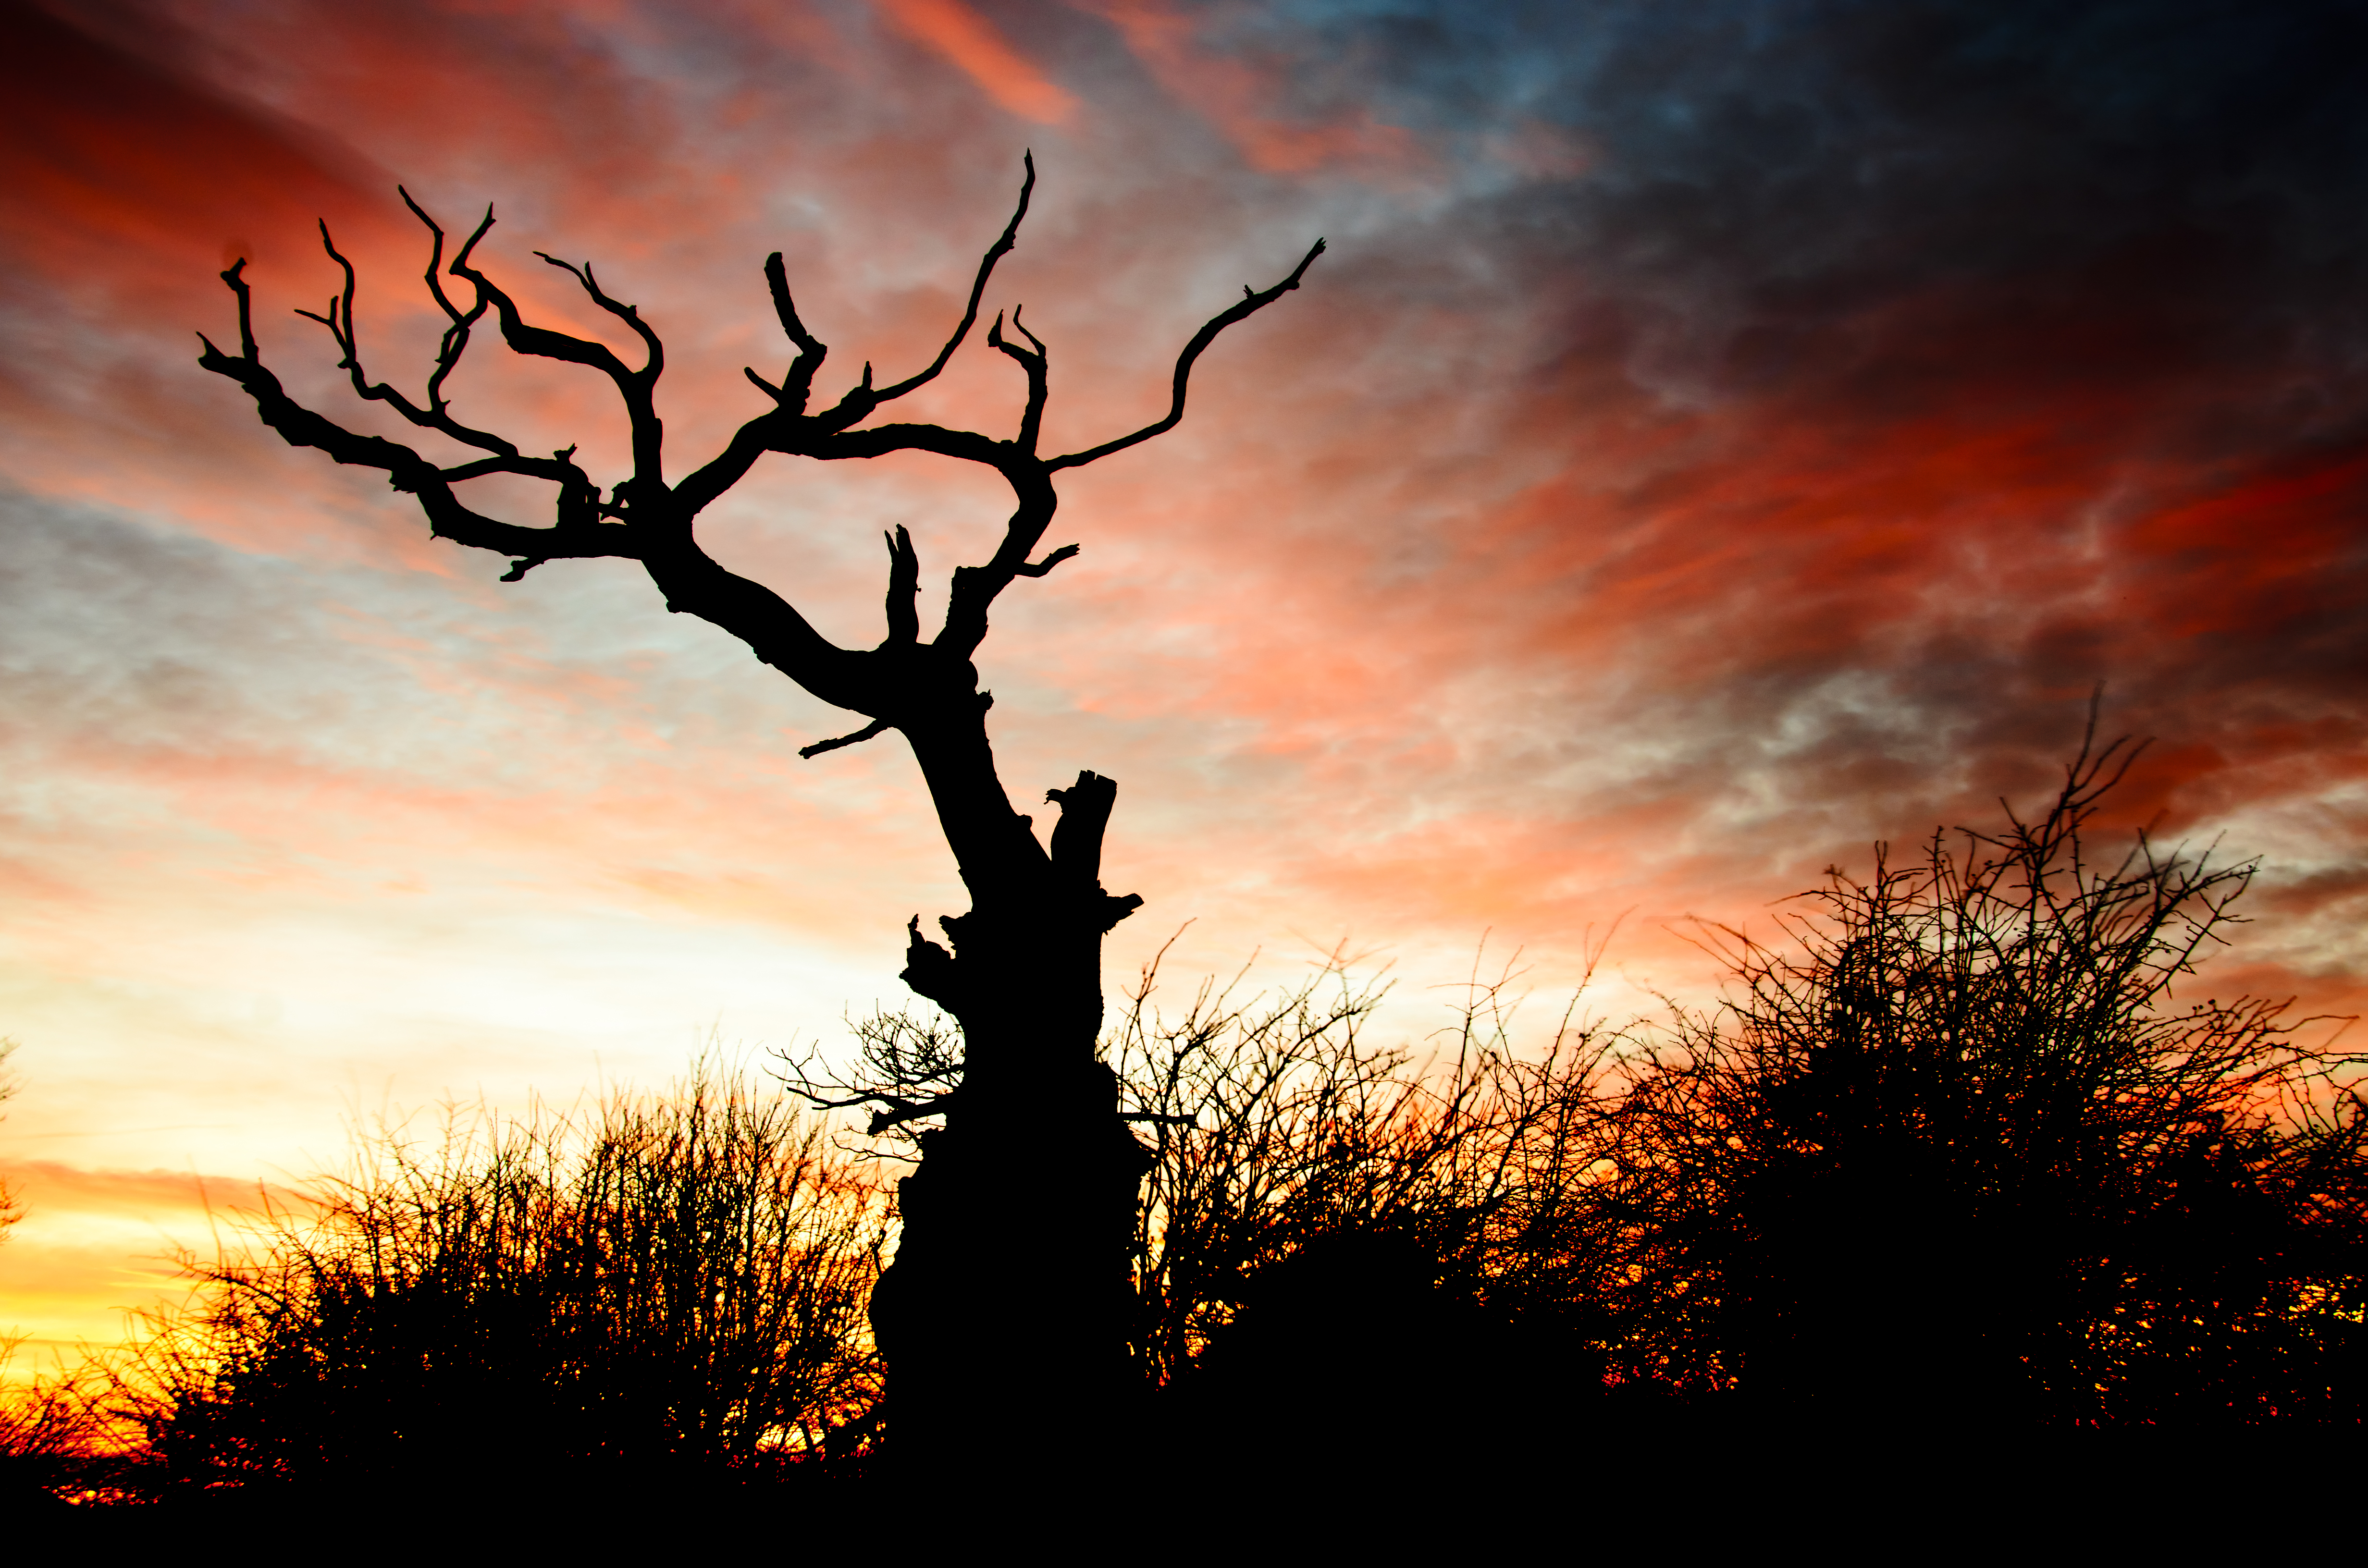 dark, sunset, silhouette, branches, snag